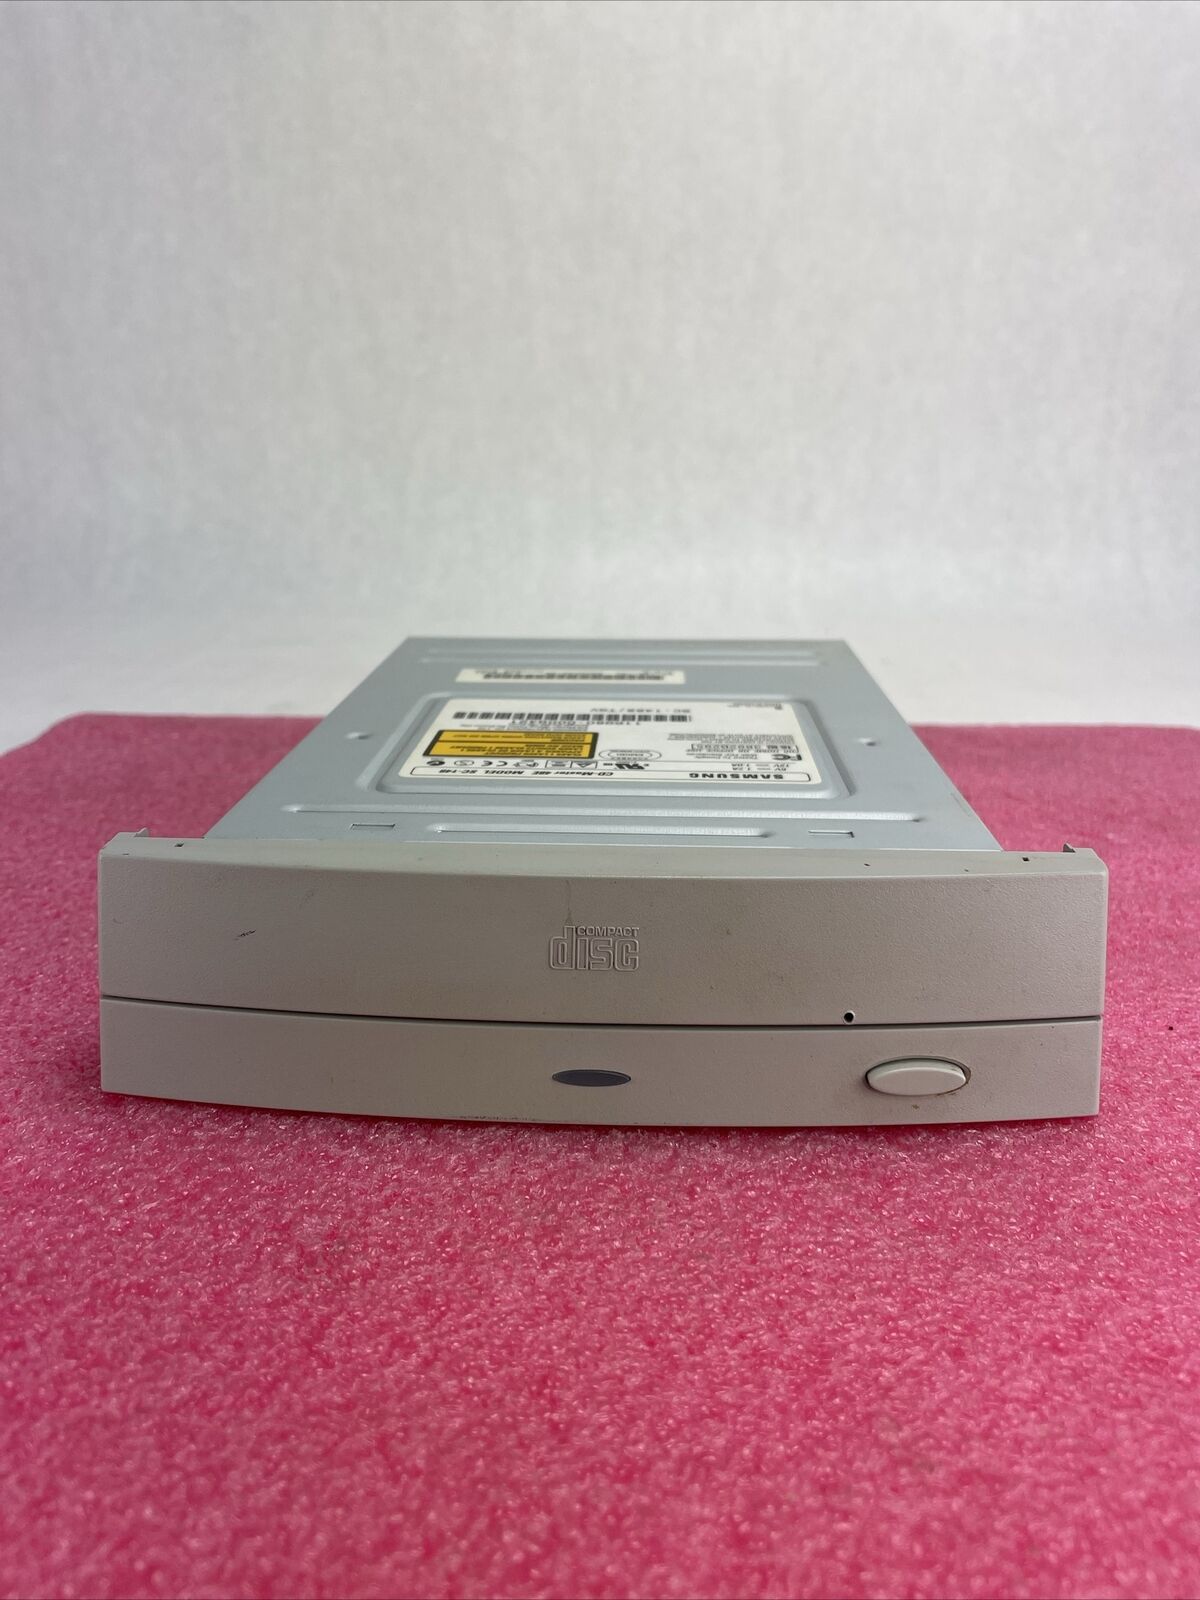 Samsung CD-Master 48E SC-148 Optical Drive